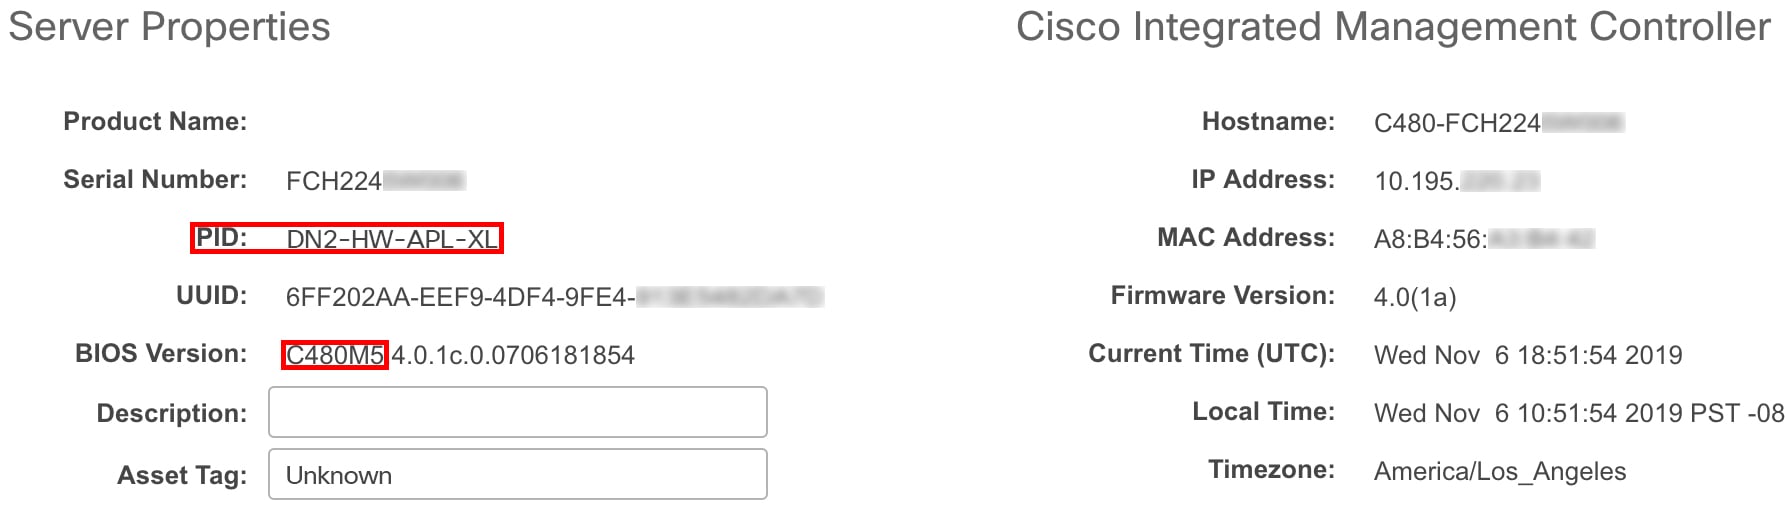 Cisco Integrated Management Controller - [Server Properties]